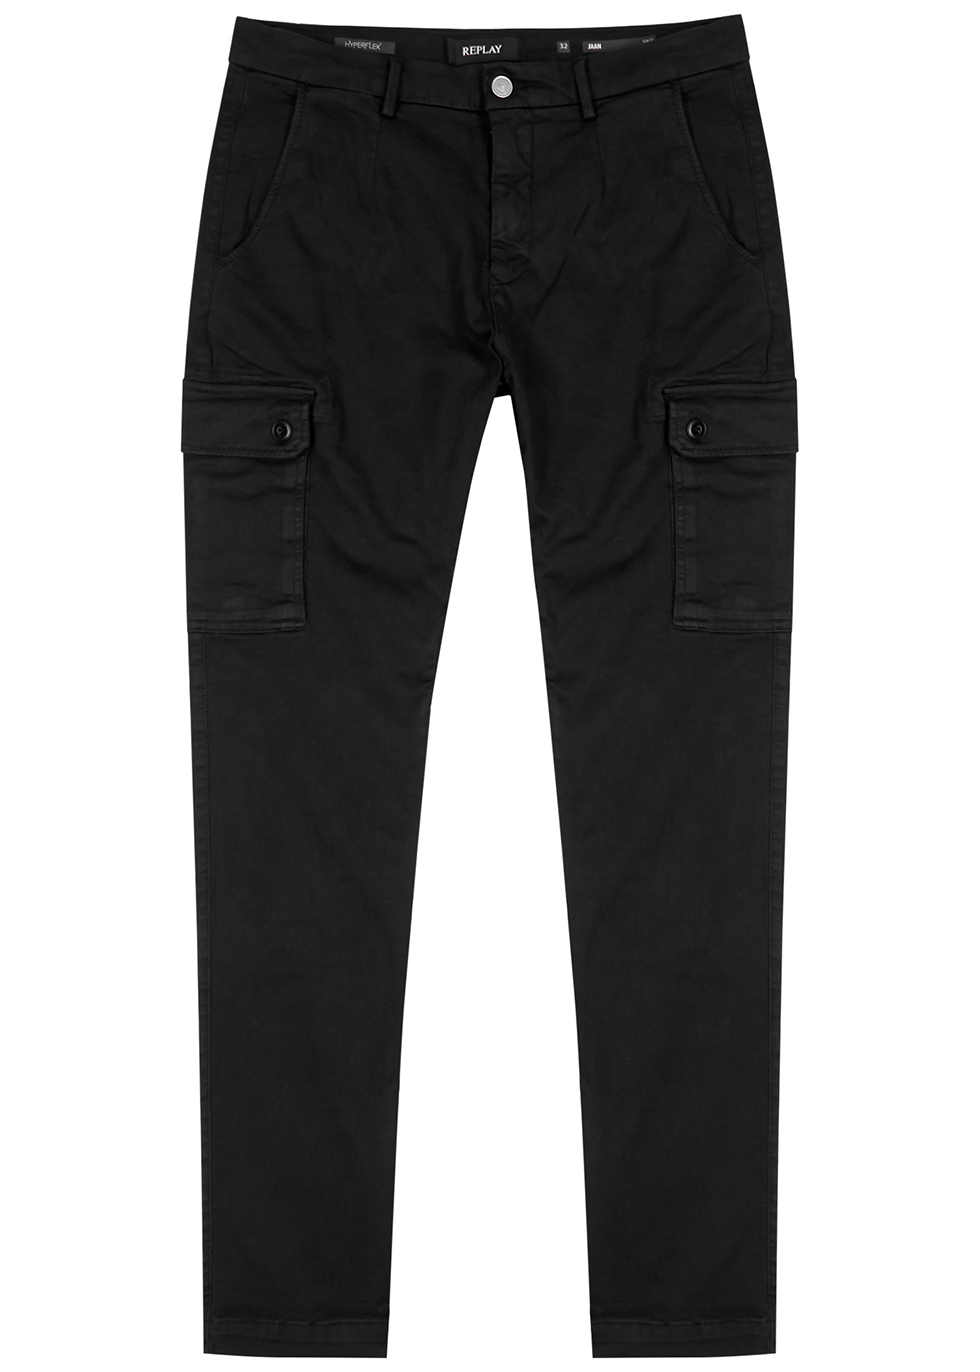 Replay Jann Hyperflex X.LITE black slim-leg cargo trousers - Harvey Nichols